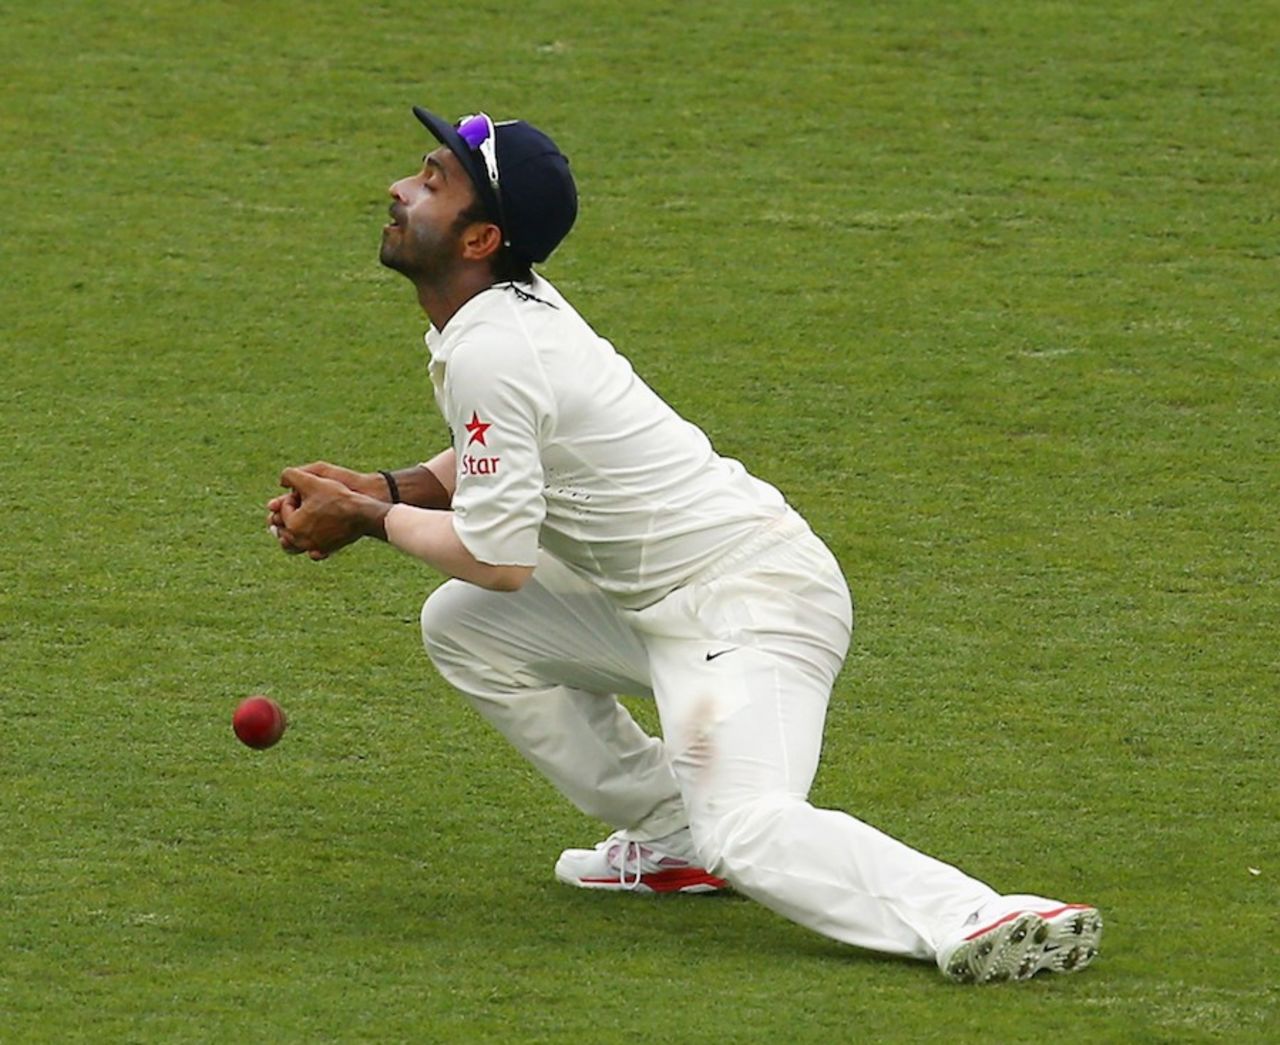 Ajinkya Rahane drops a catch off Shaun Marsh, Australia v India, 2nd Test, Brisbane, 2nd day, December 18, 2014